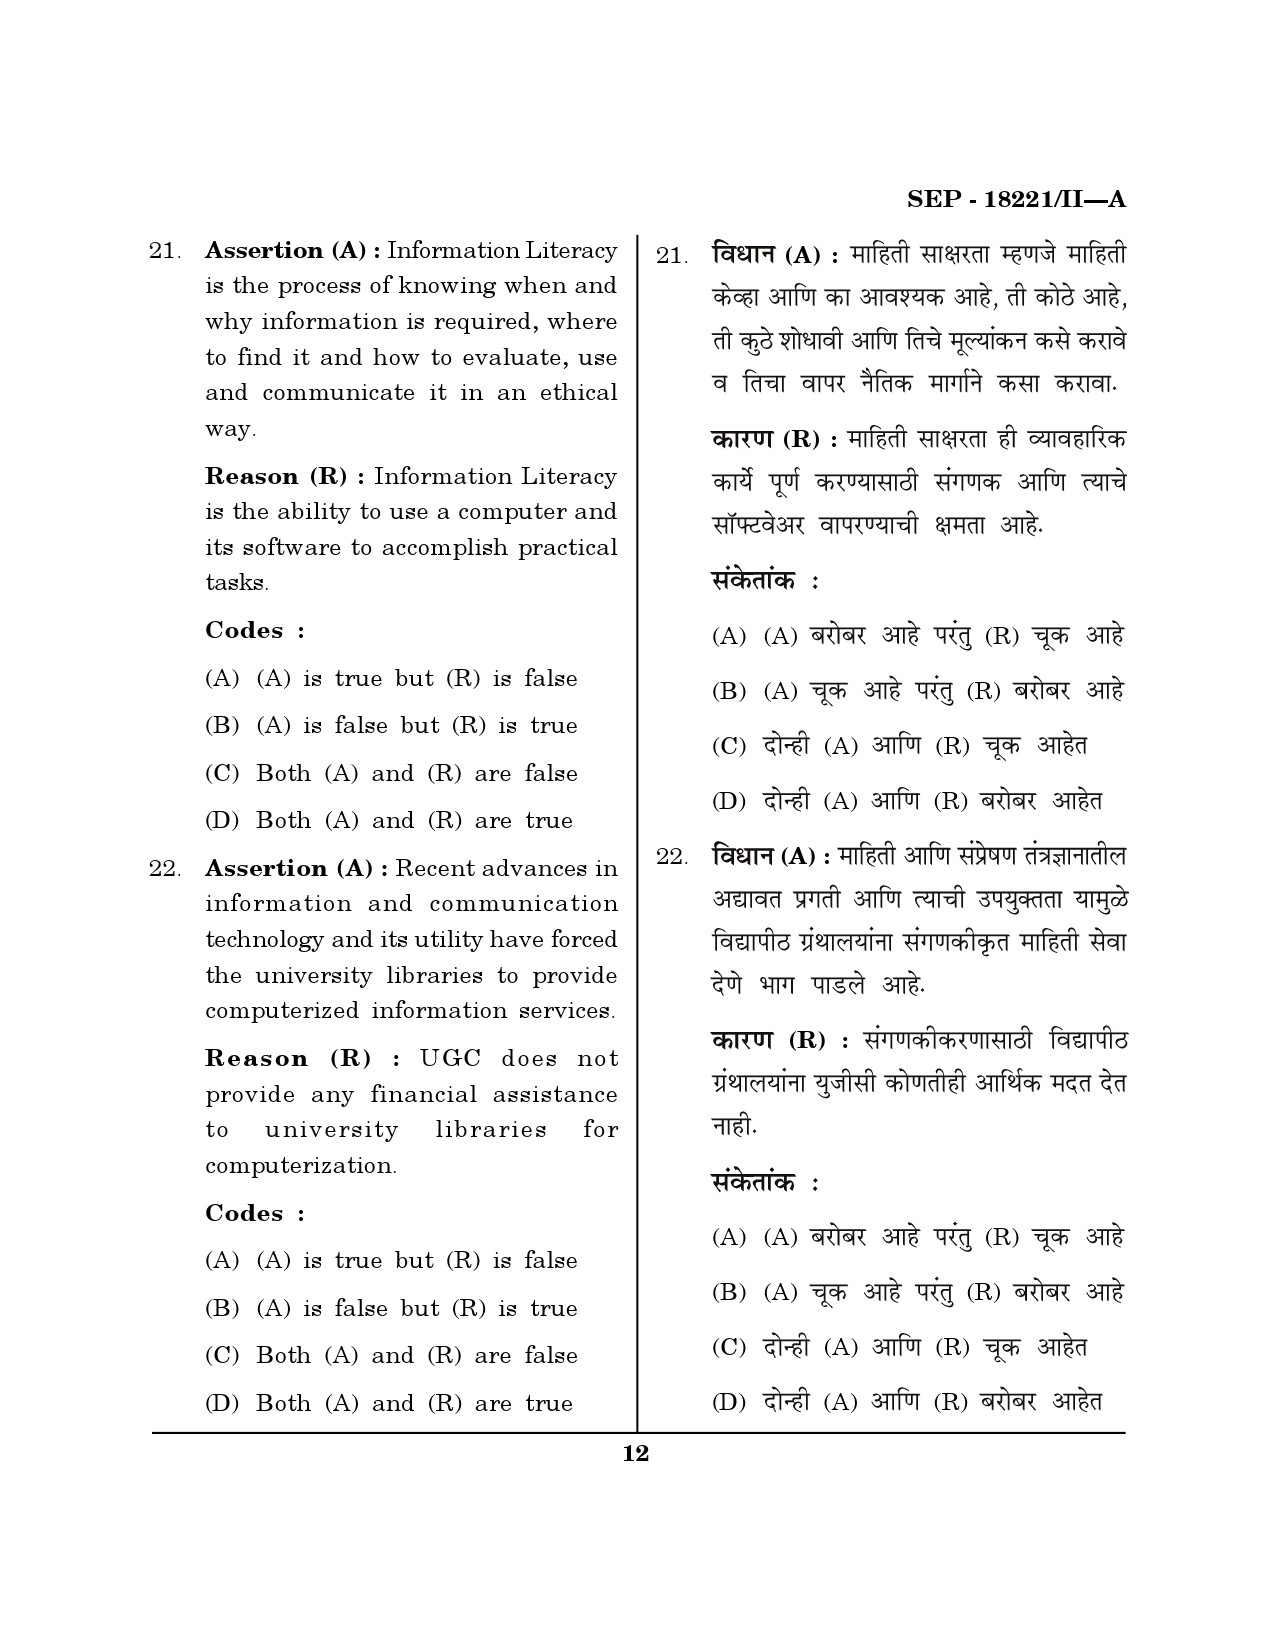 Maharashtra SET Library Information Science Exam Question Paper September 2021 11